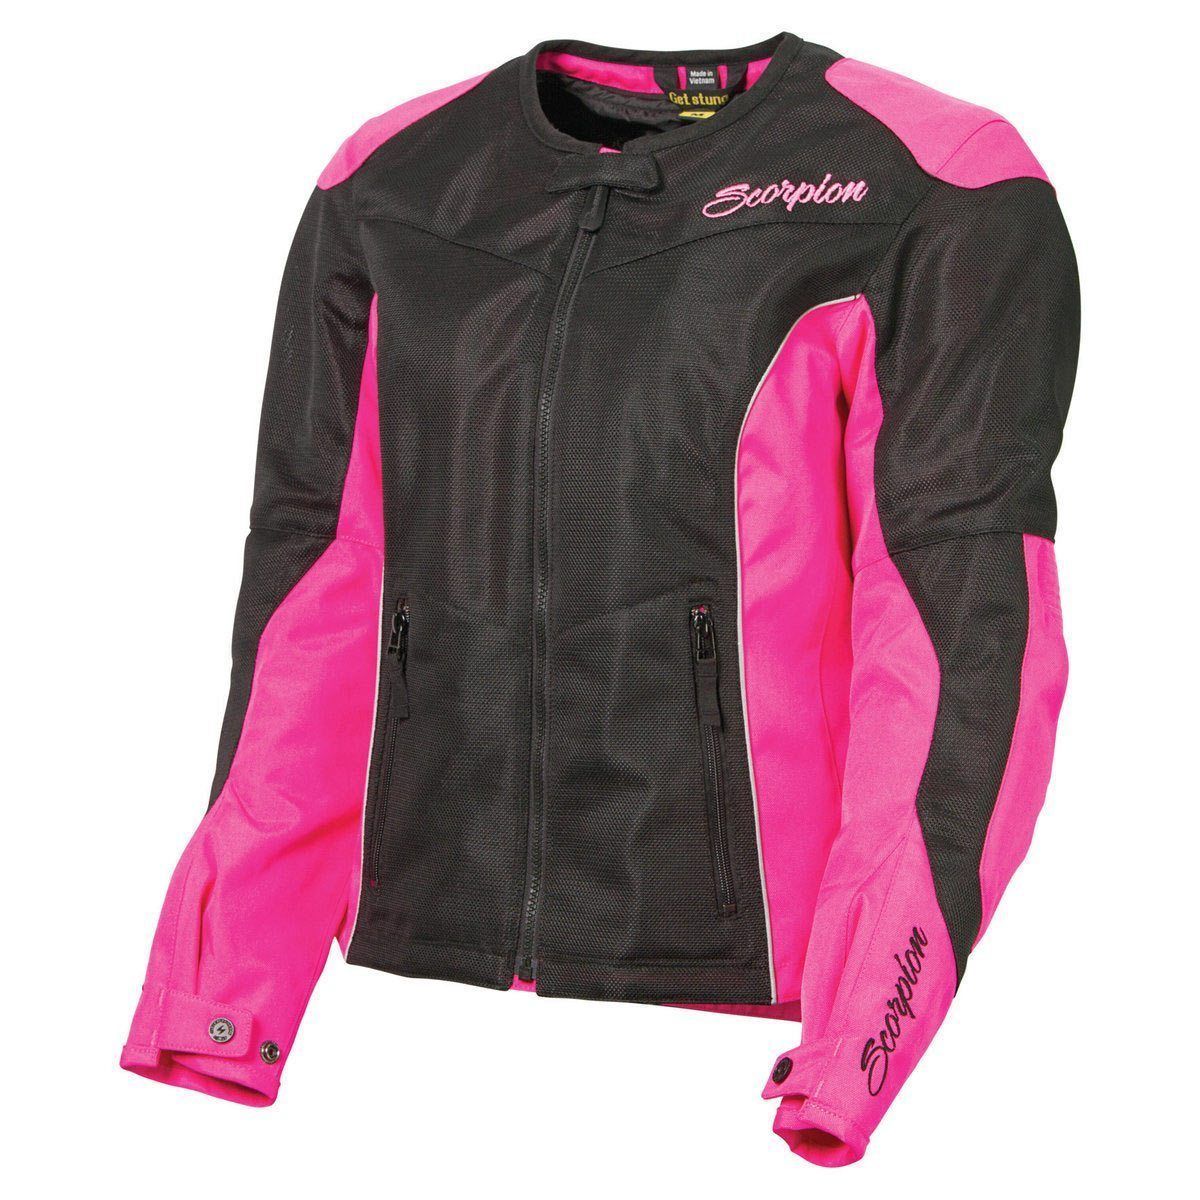 Scorpion Verano Women's Pink Mesh Jacket with Armor